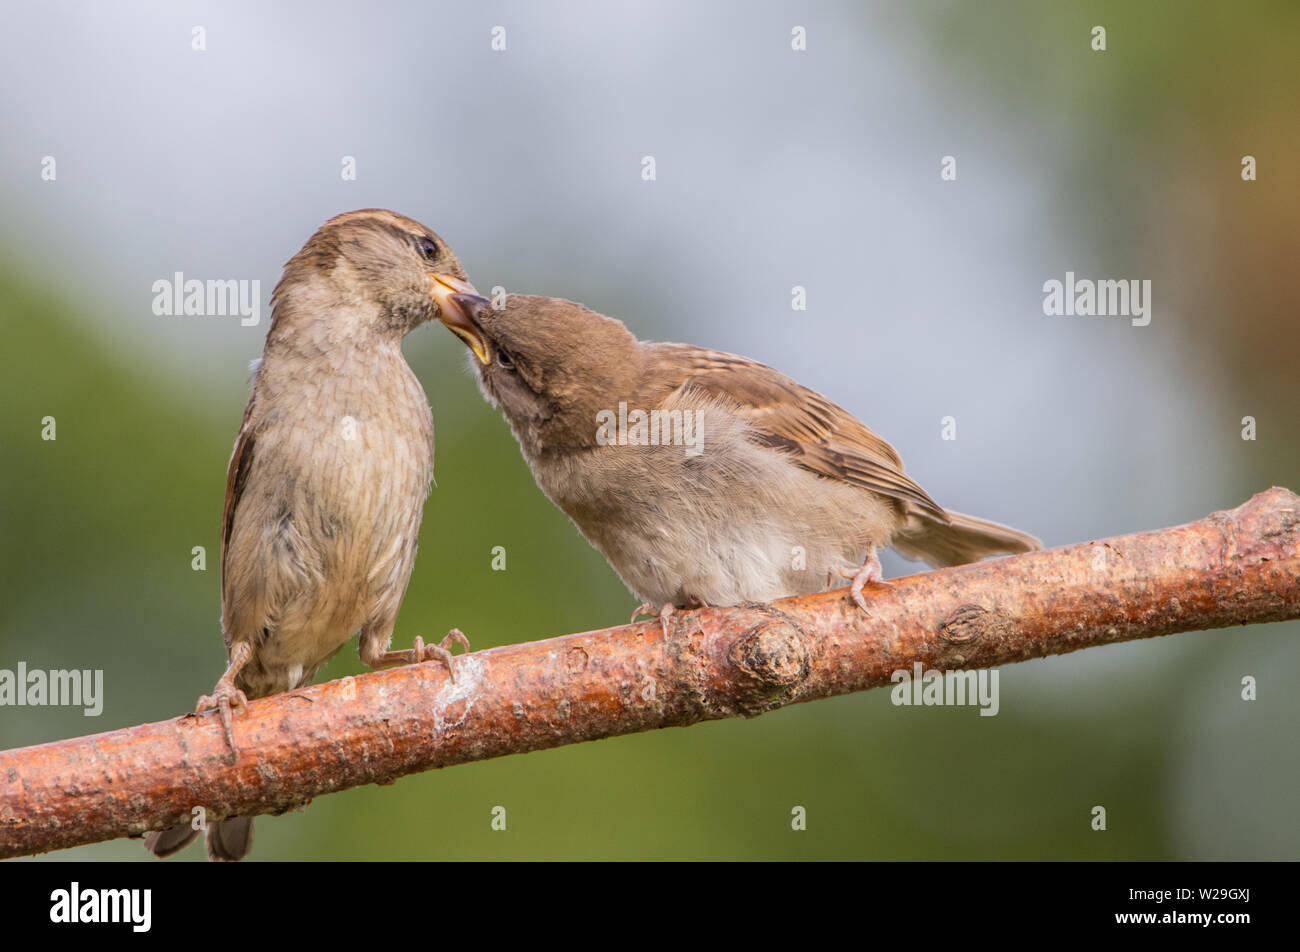 House Sparrow, common sparrow, wild birds in a British Garden enjoying the sunshine in Spring Stock Photo